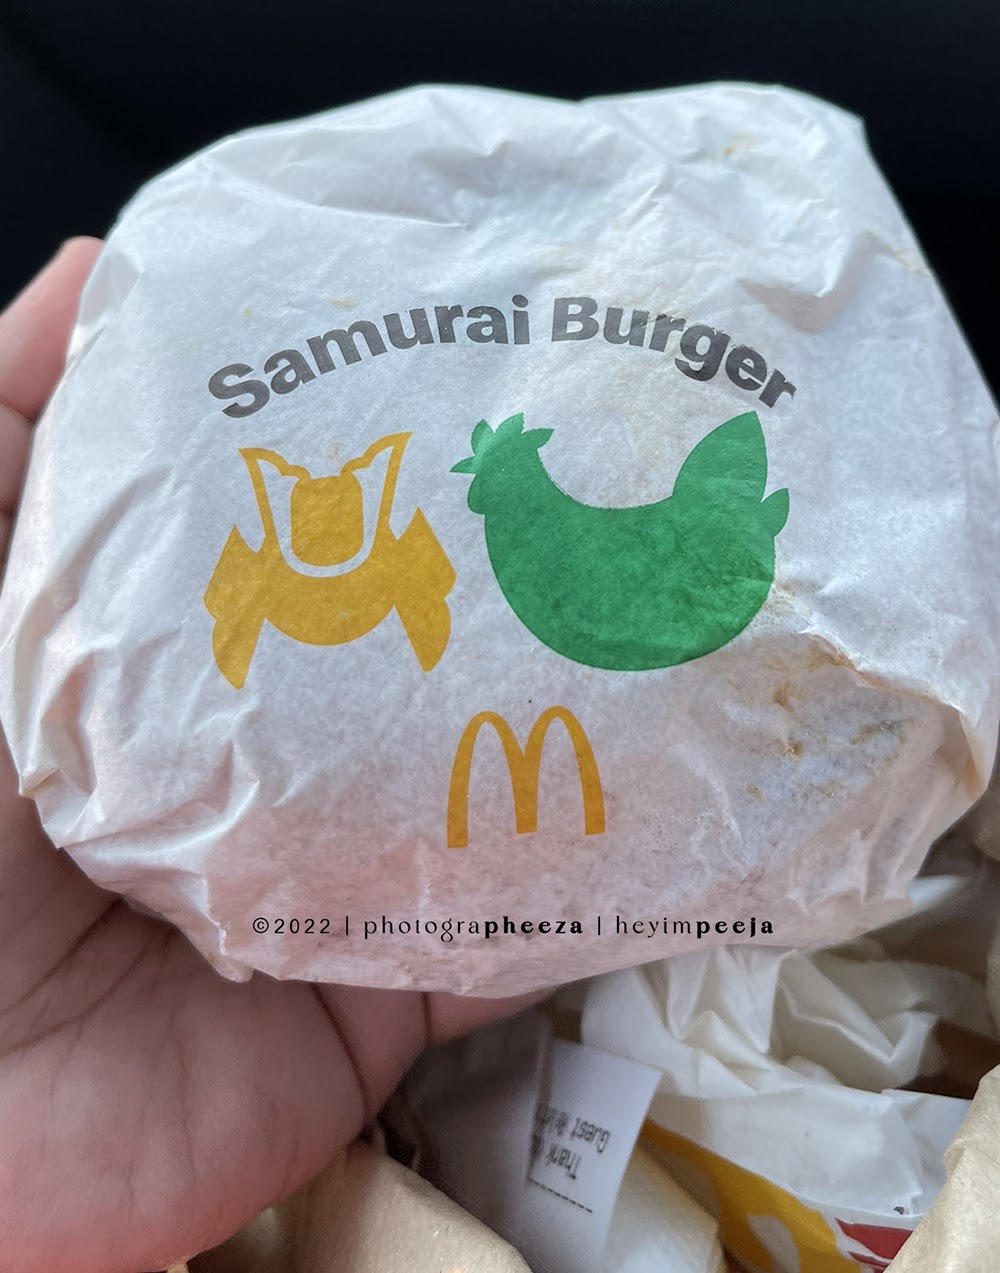 samurai burger mcdonalds 2022